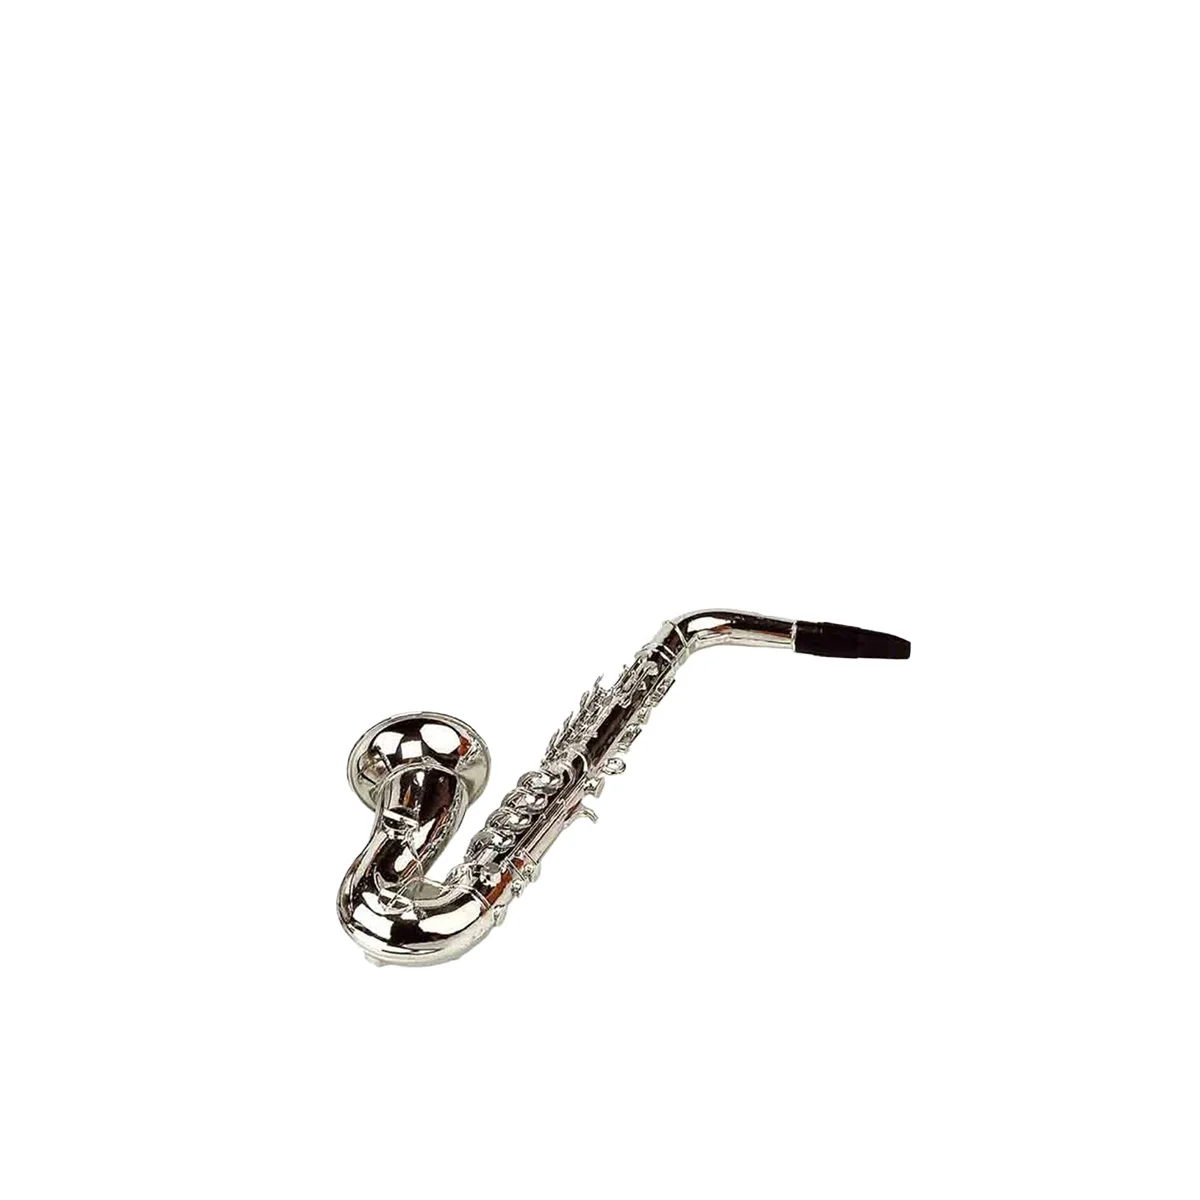 Reig Musicales - Saxophone - Musique